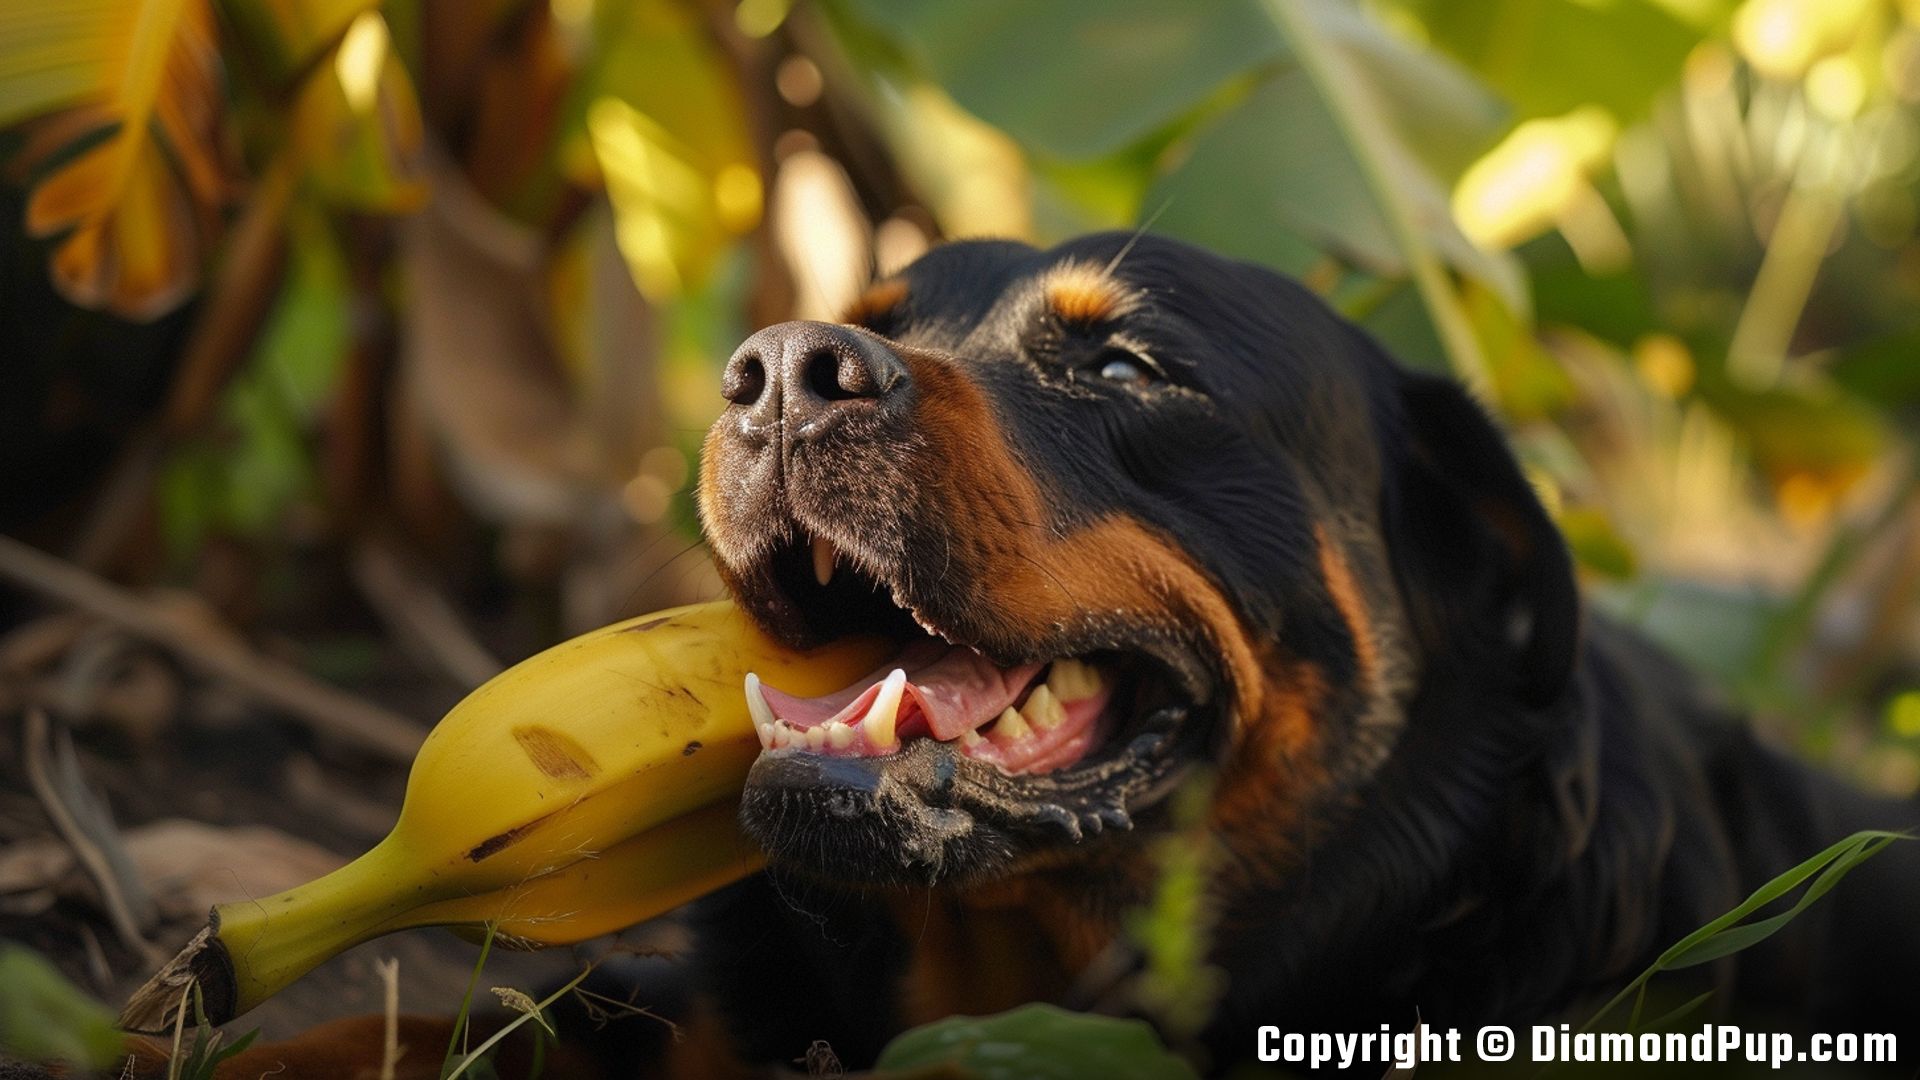 Image of an Adorable Rottweiler Eating Banana